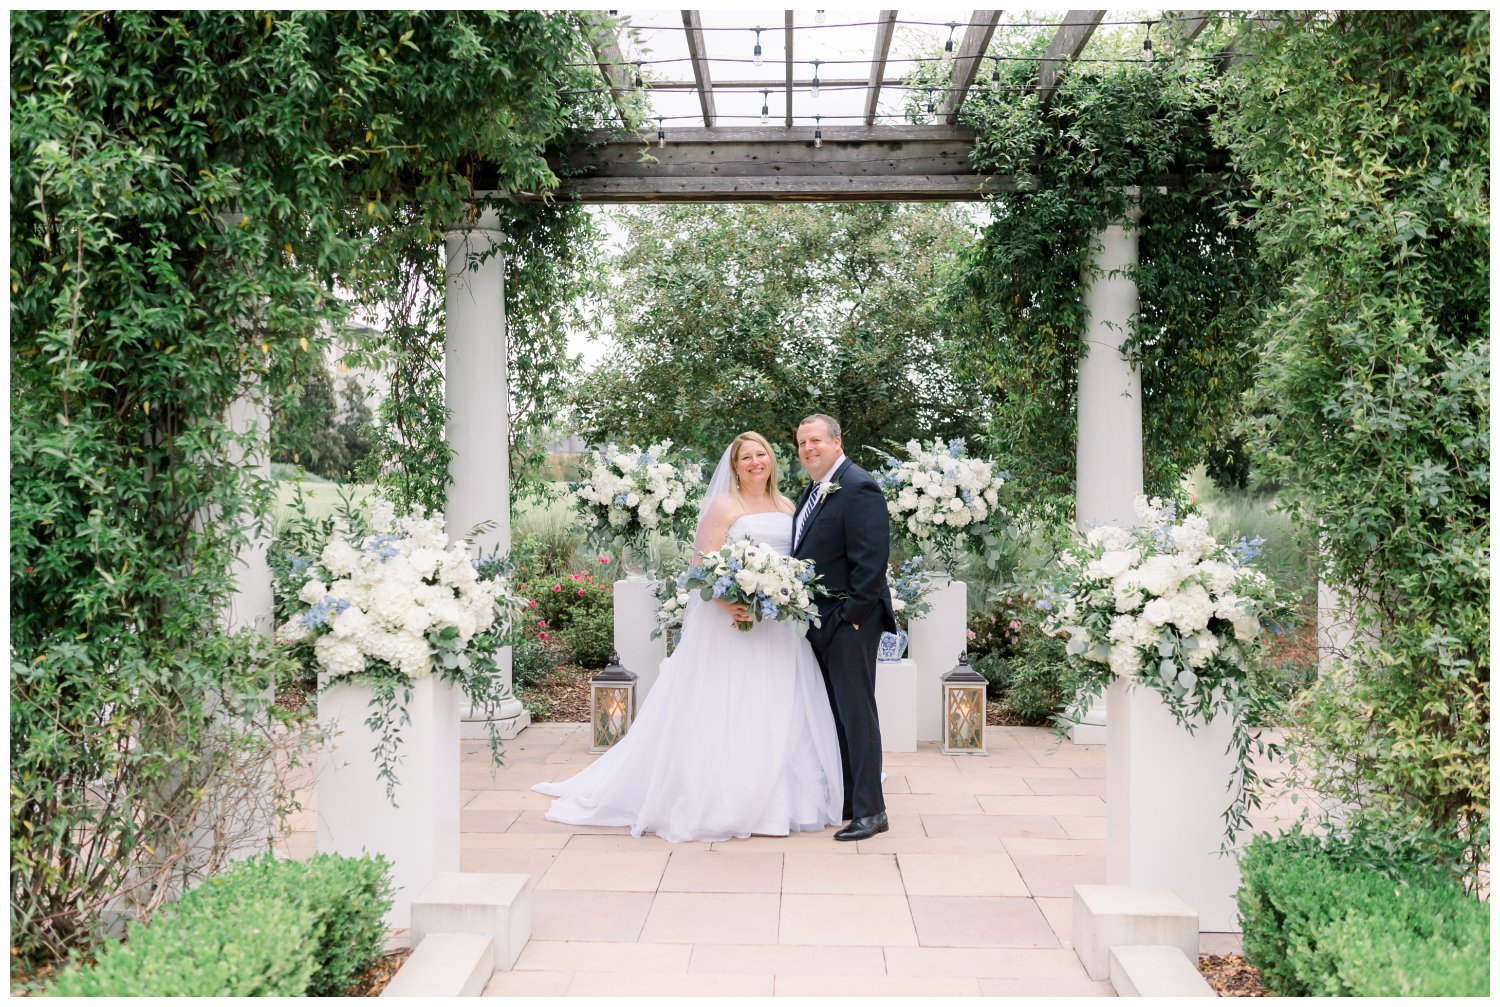 Ballantyne Hotel wedding garden inspired in Charlotte North Carolina by photographer Samantha Laffoon